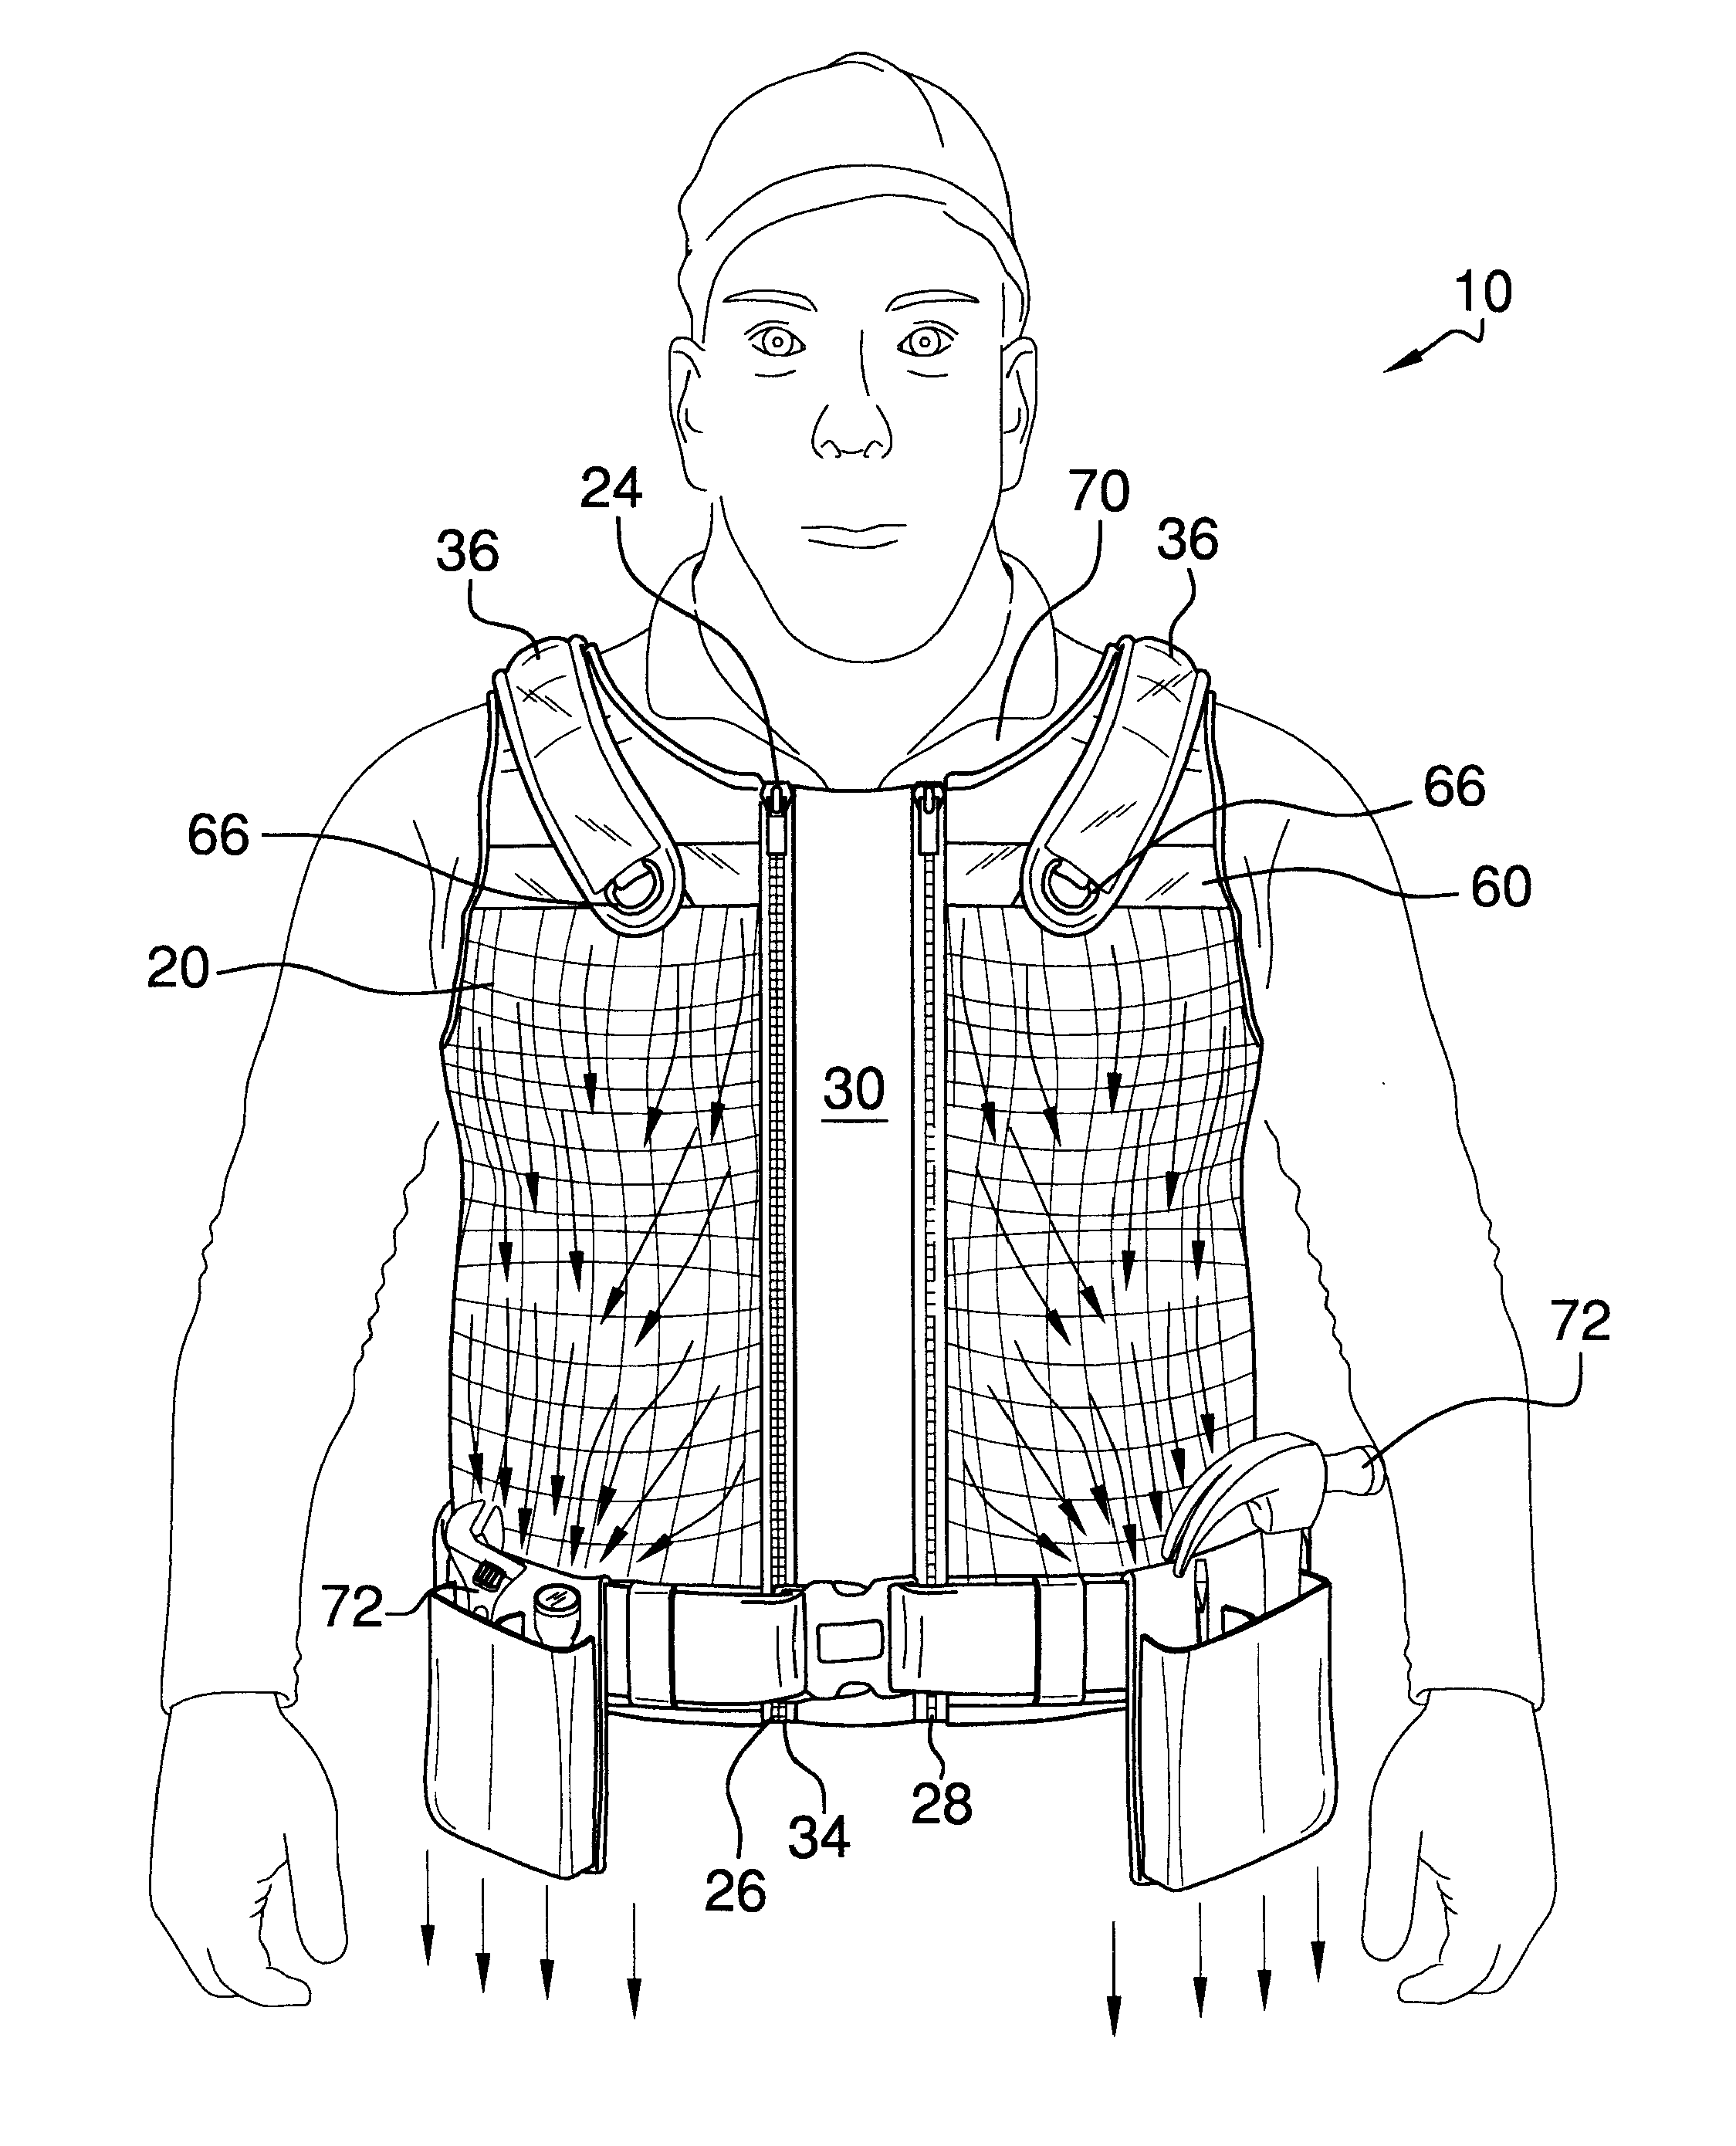 Ergonomic weight-distributing vest